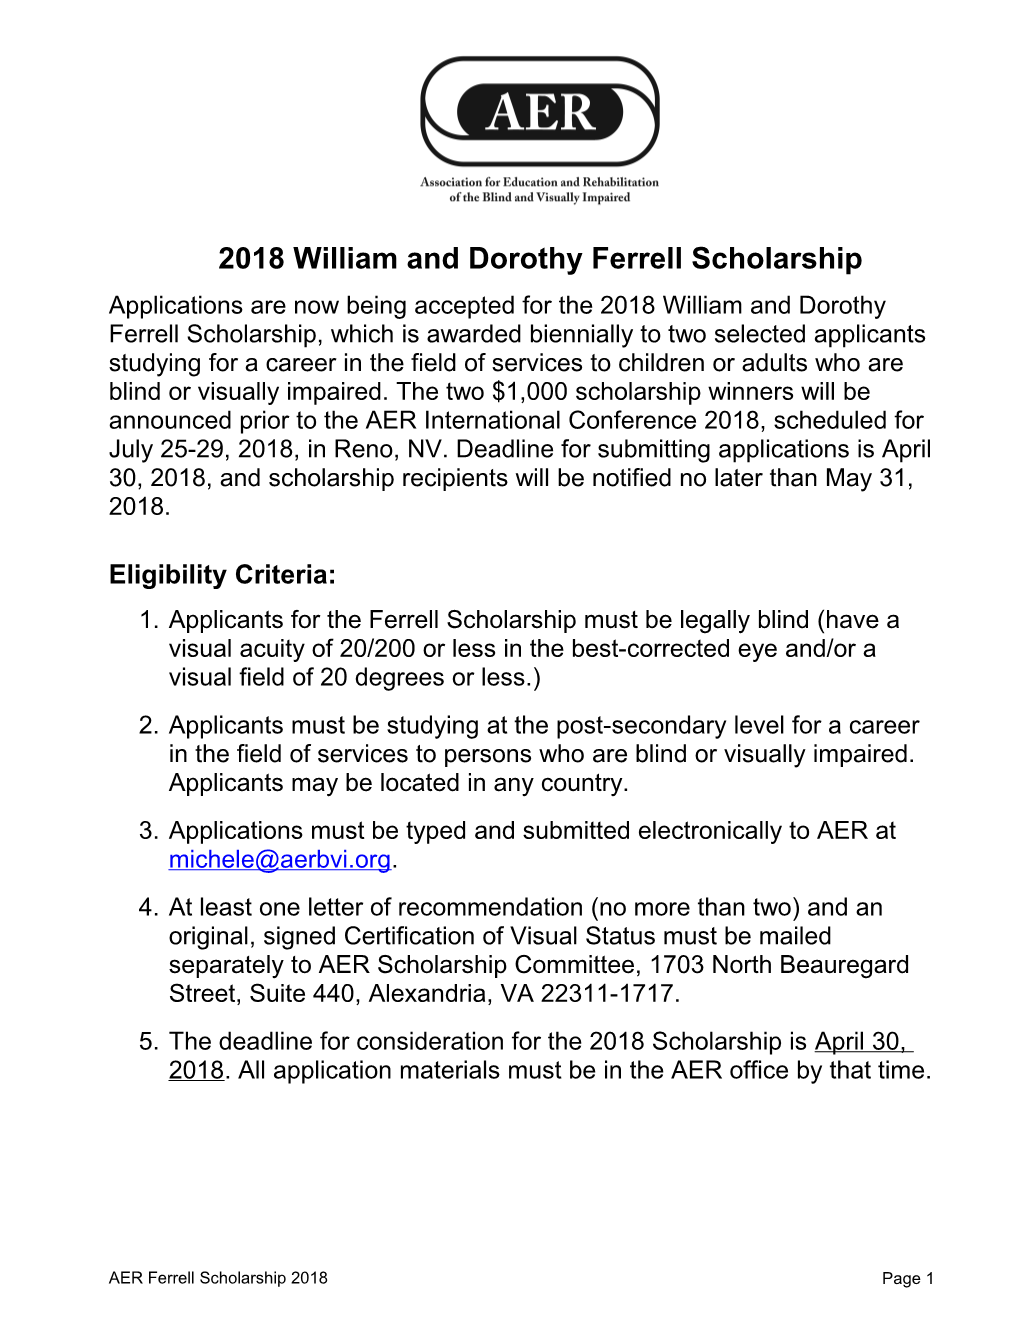 AER William and Dorothy Ferrell Scholarship